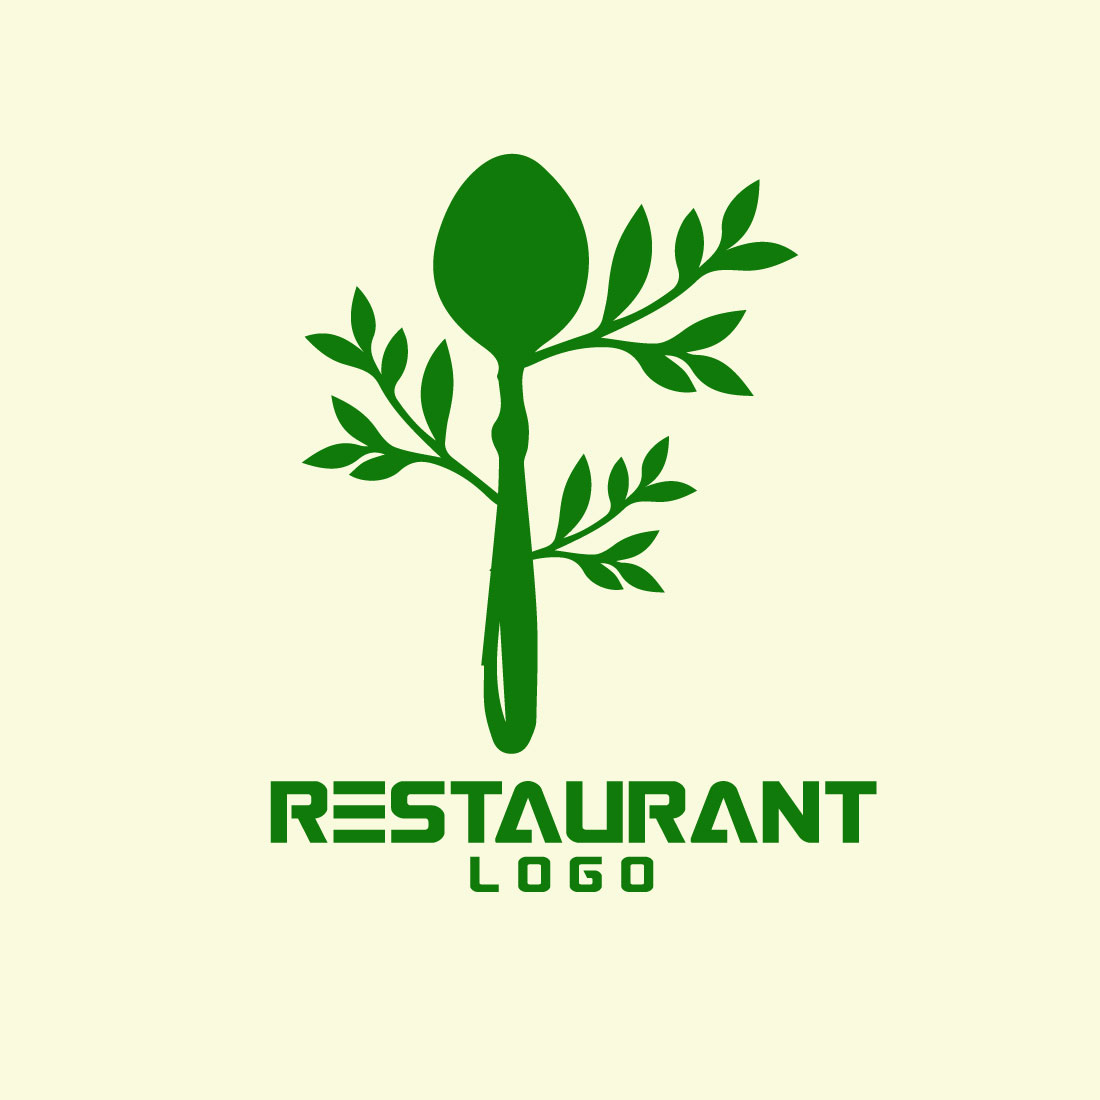 Free Green Restaurant Logo cover image.